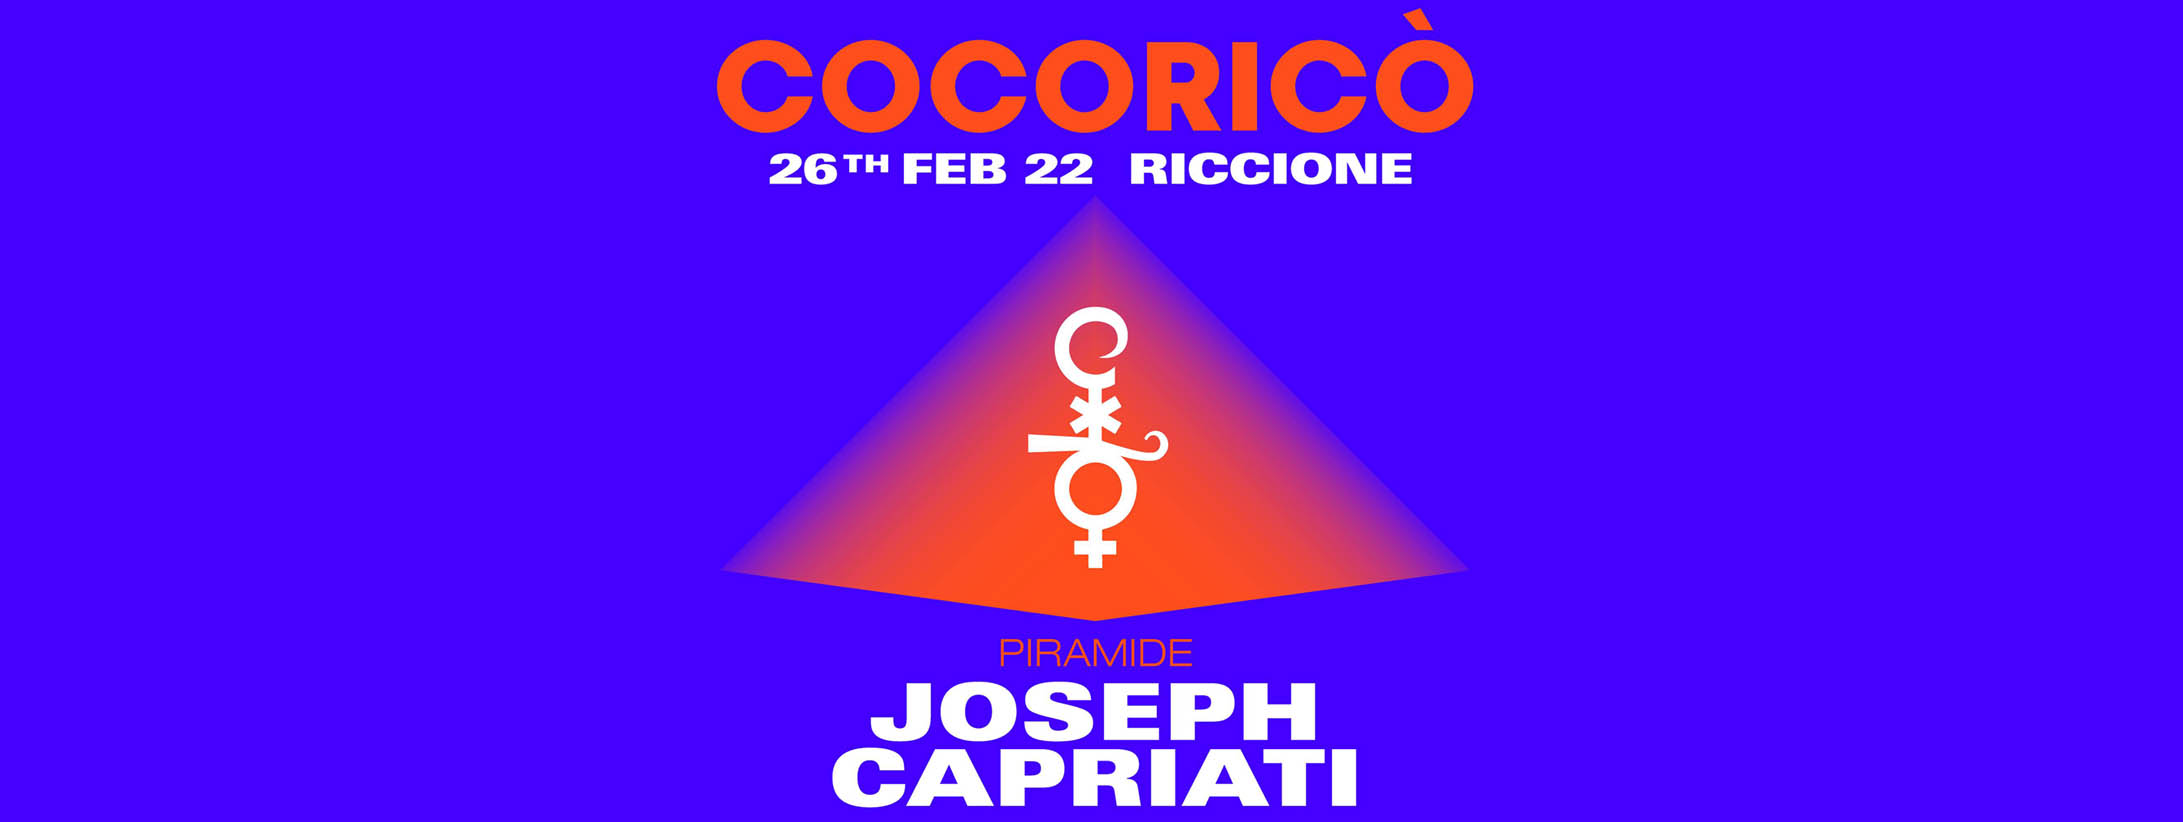 Joseph-capriati-cocorico-26-febbraio-2022